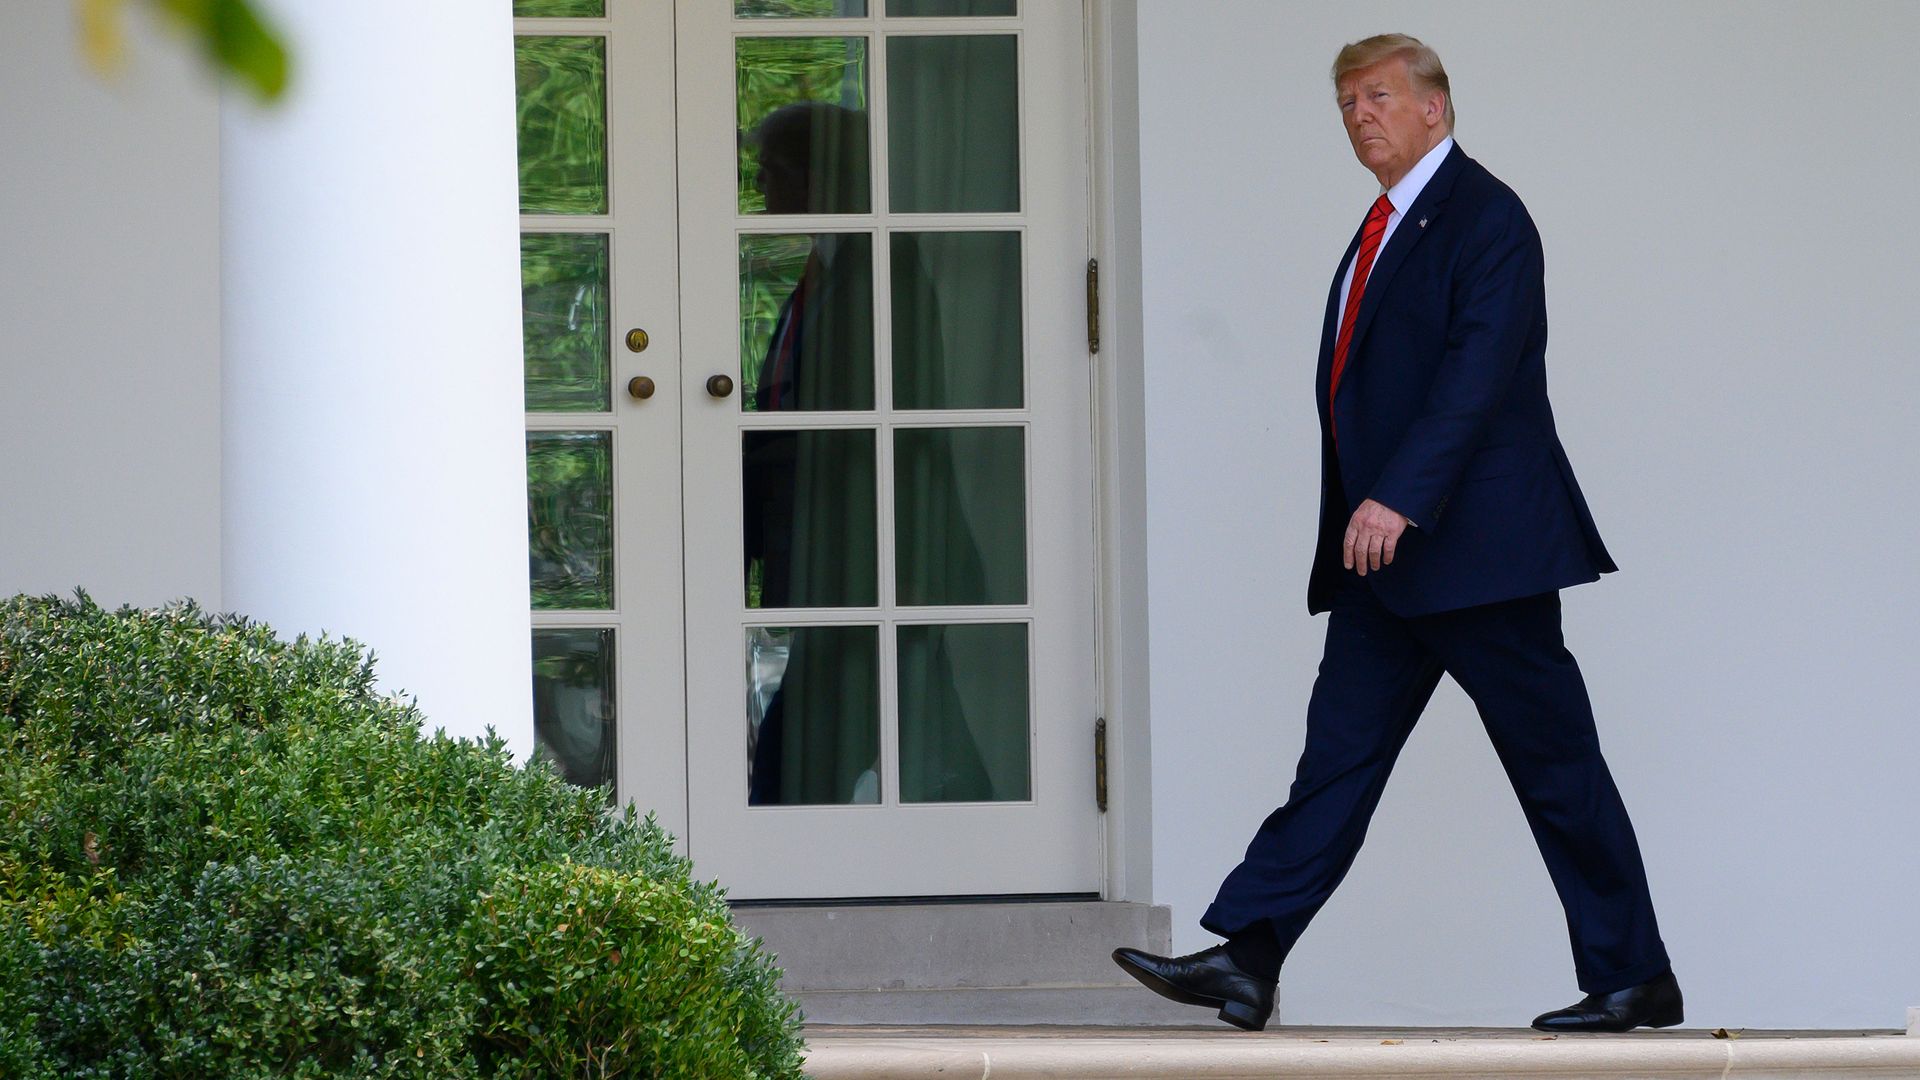  President Donald Trump arrives at the White House in Washington, DC, September 26